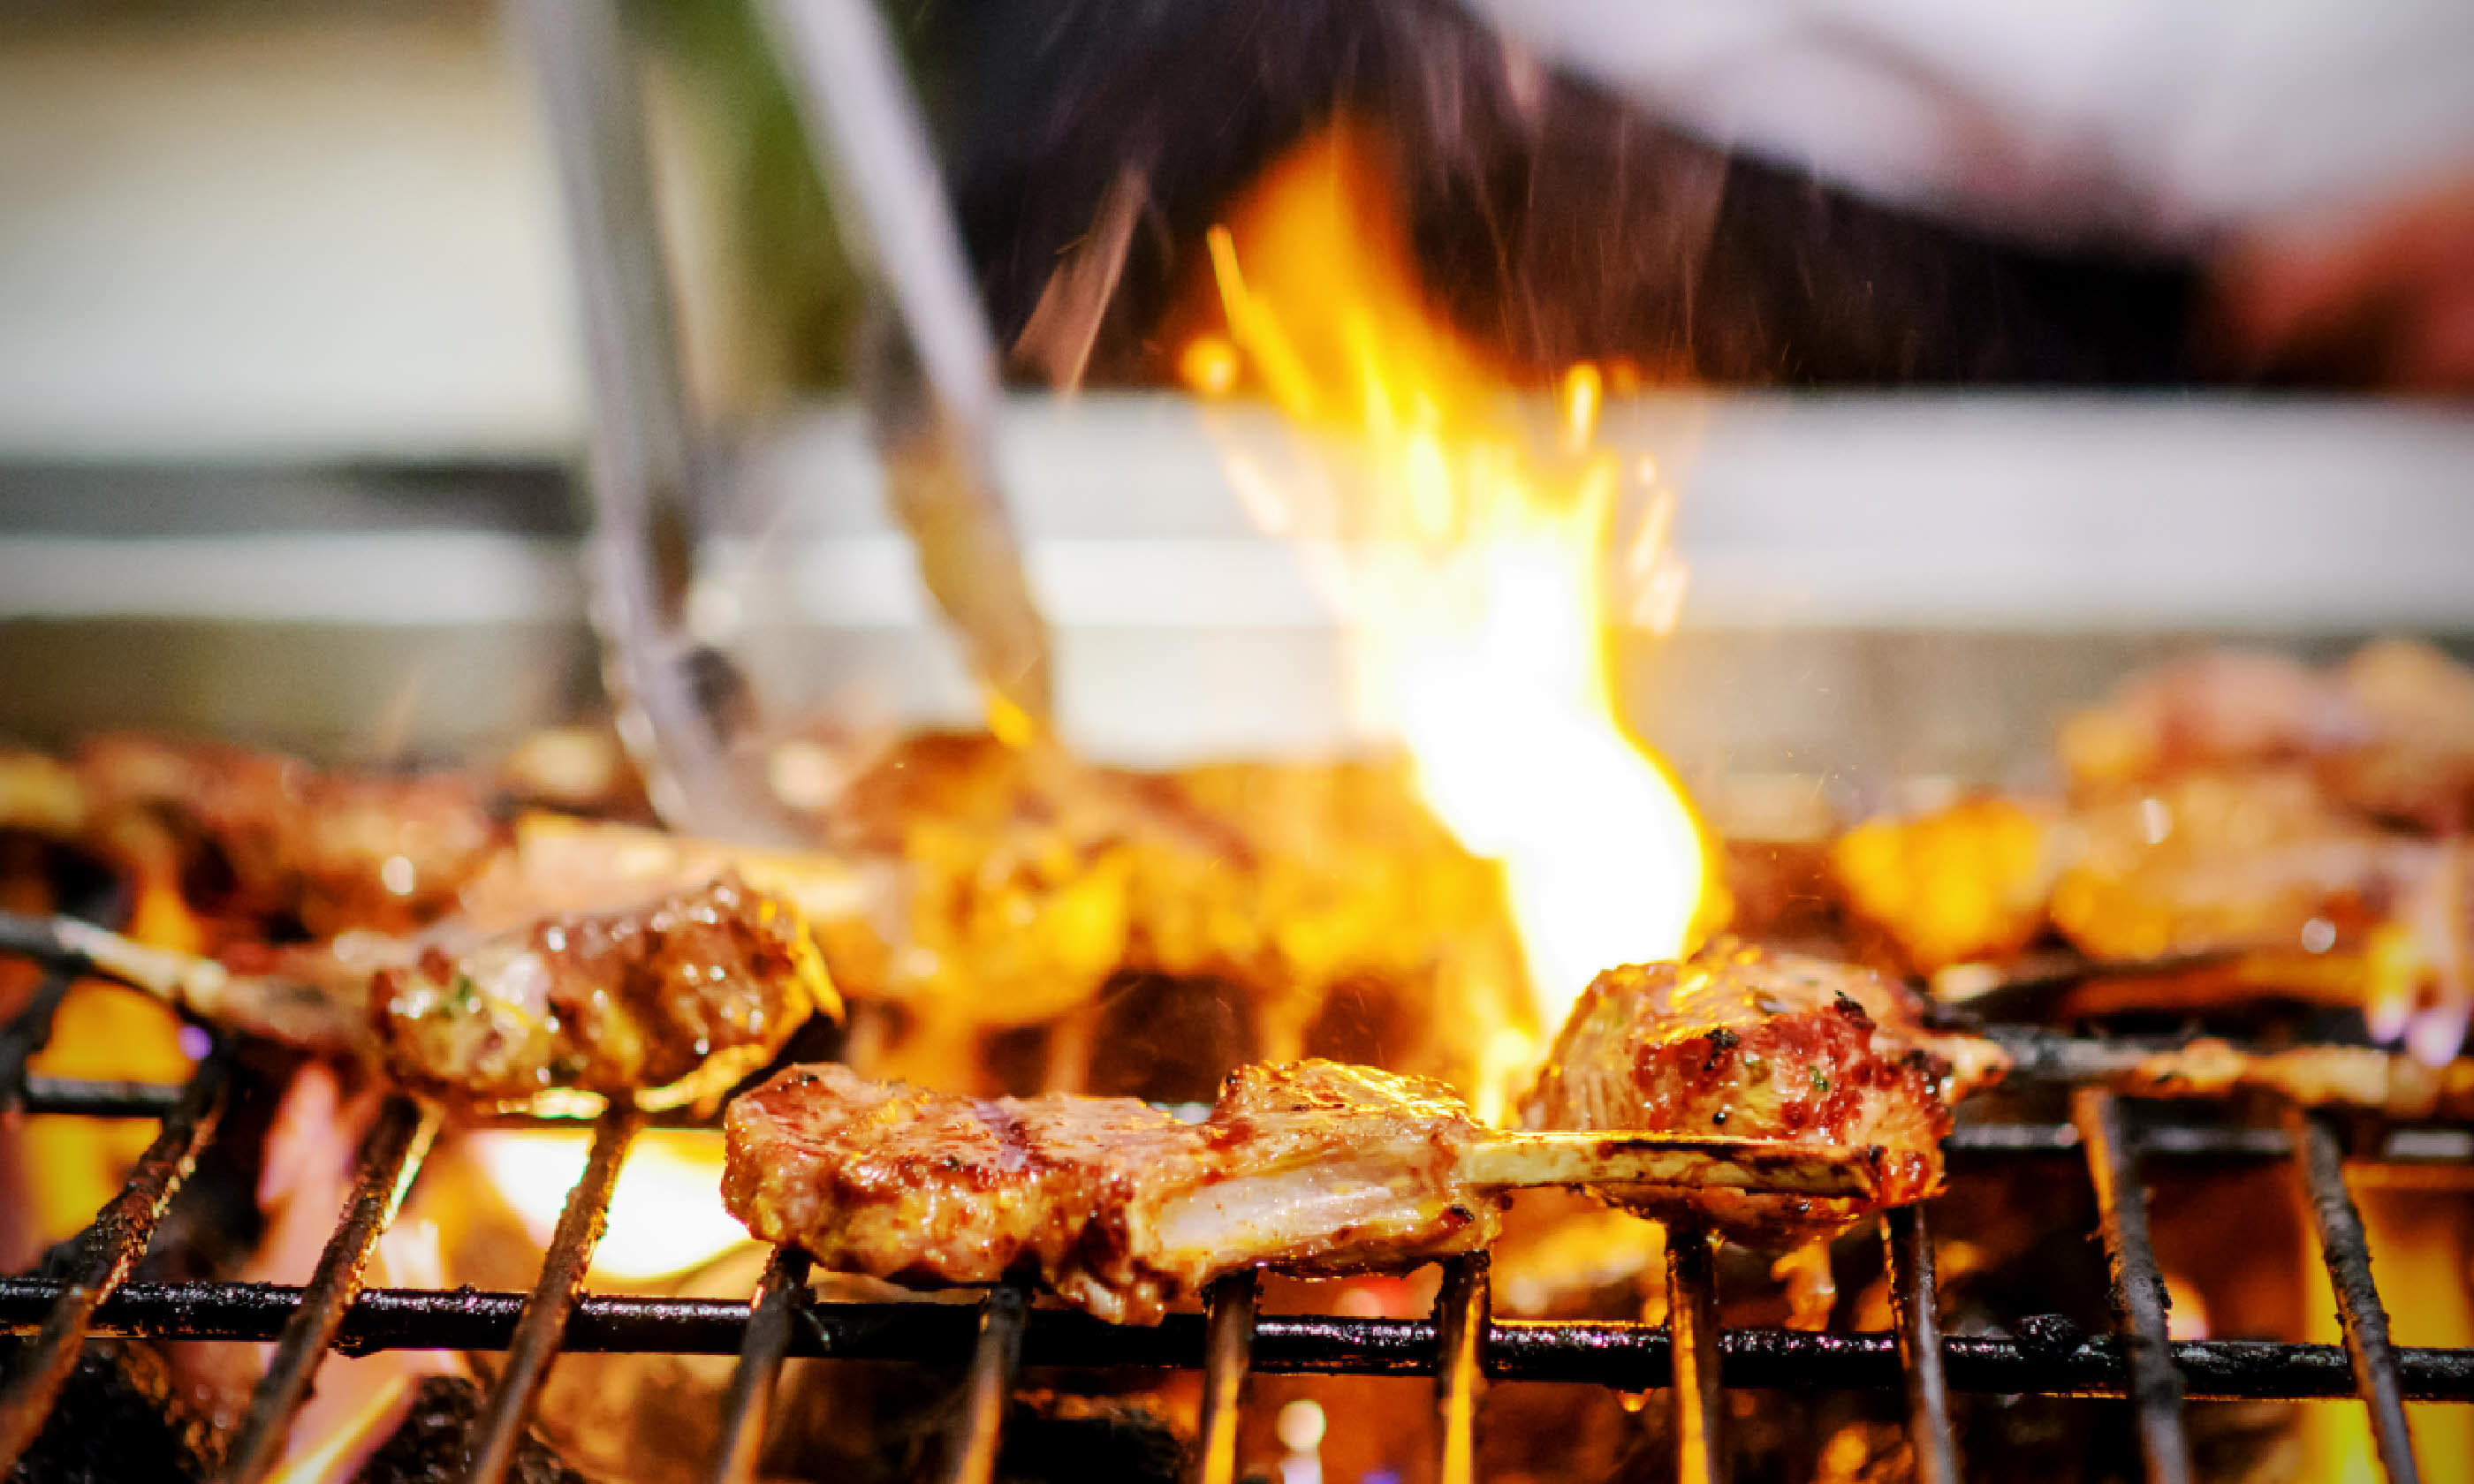 Lamb ribs on flame (Shutterstock)